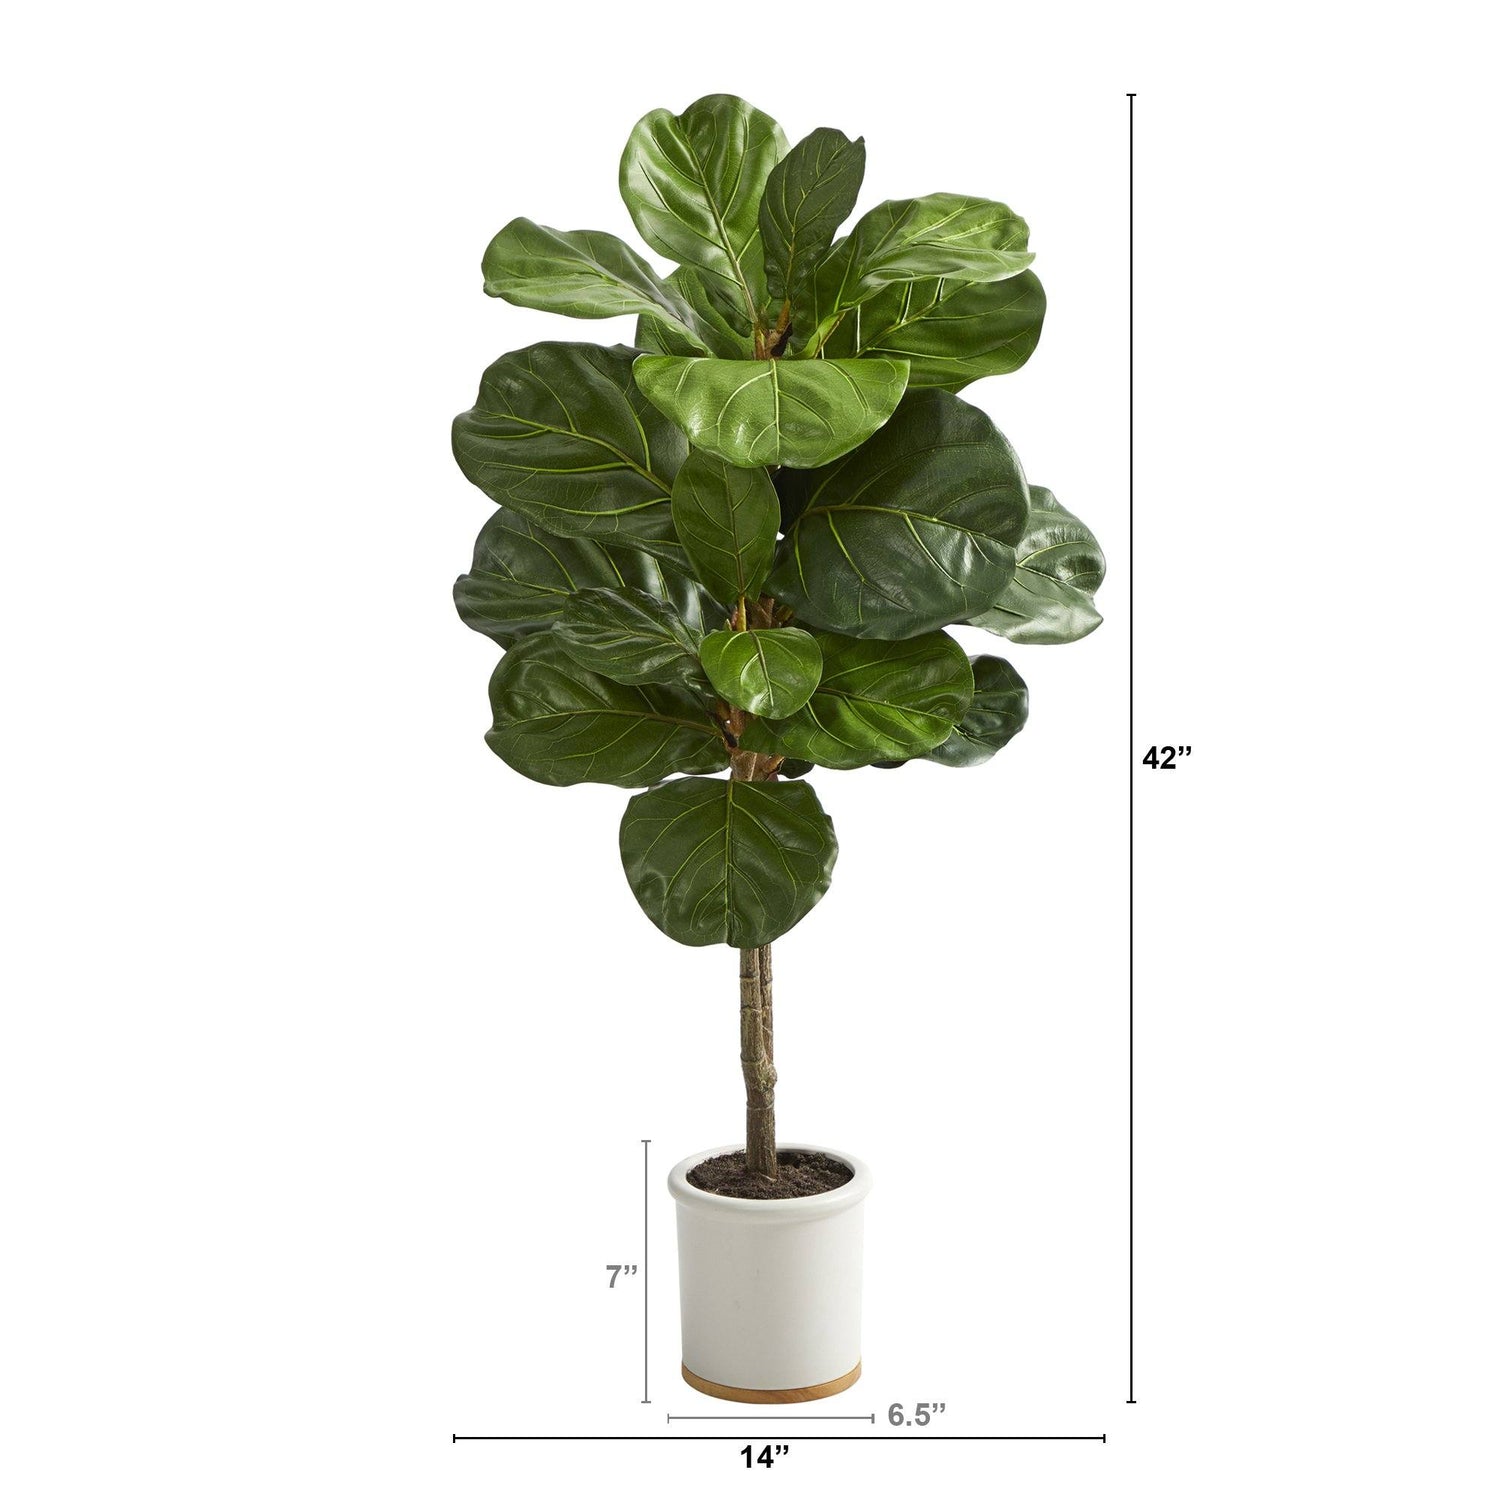 3.5’ Fiddle Leaf Artificial Tree in White Ceramic Planter